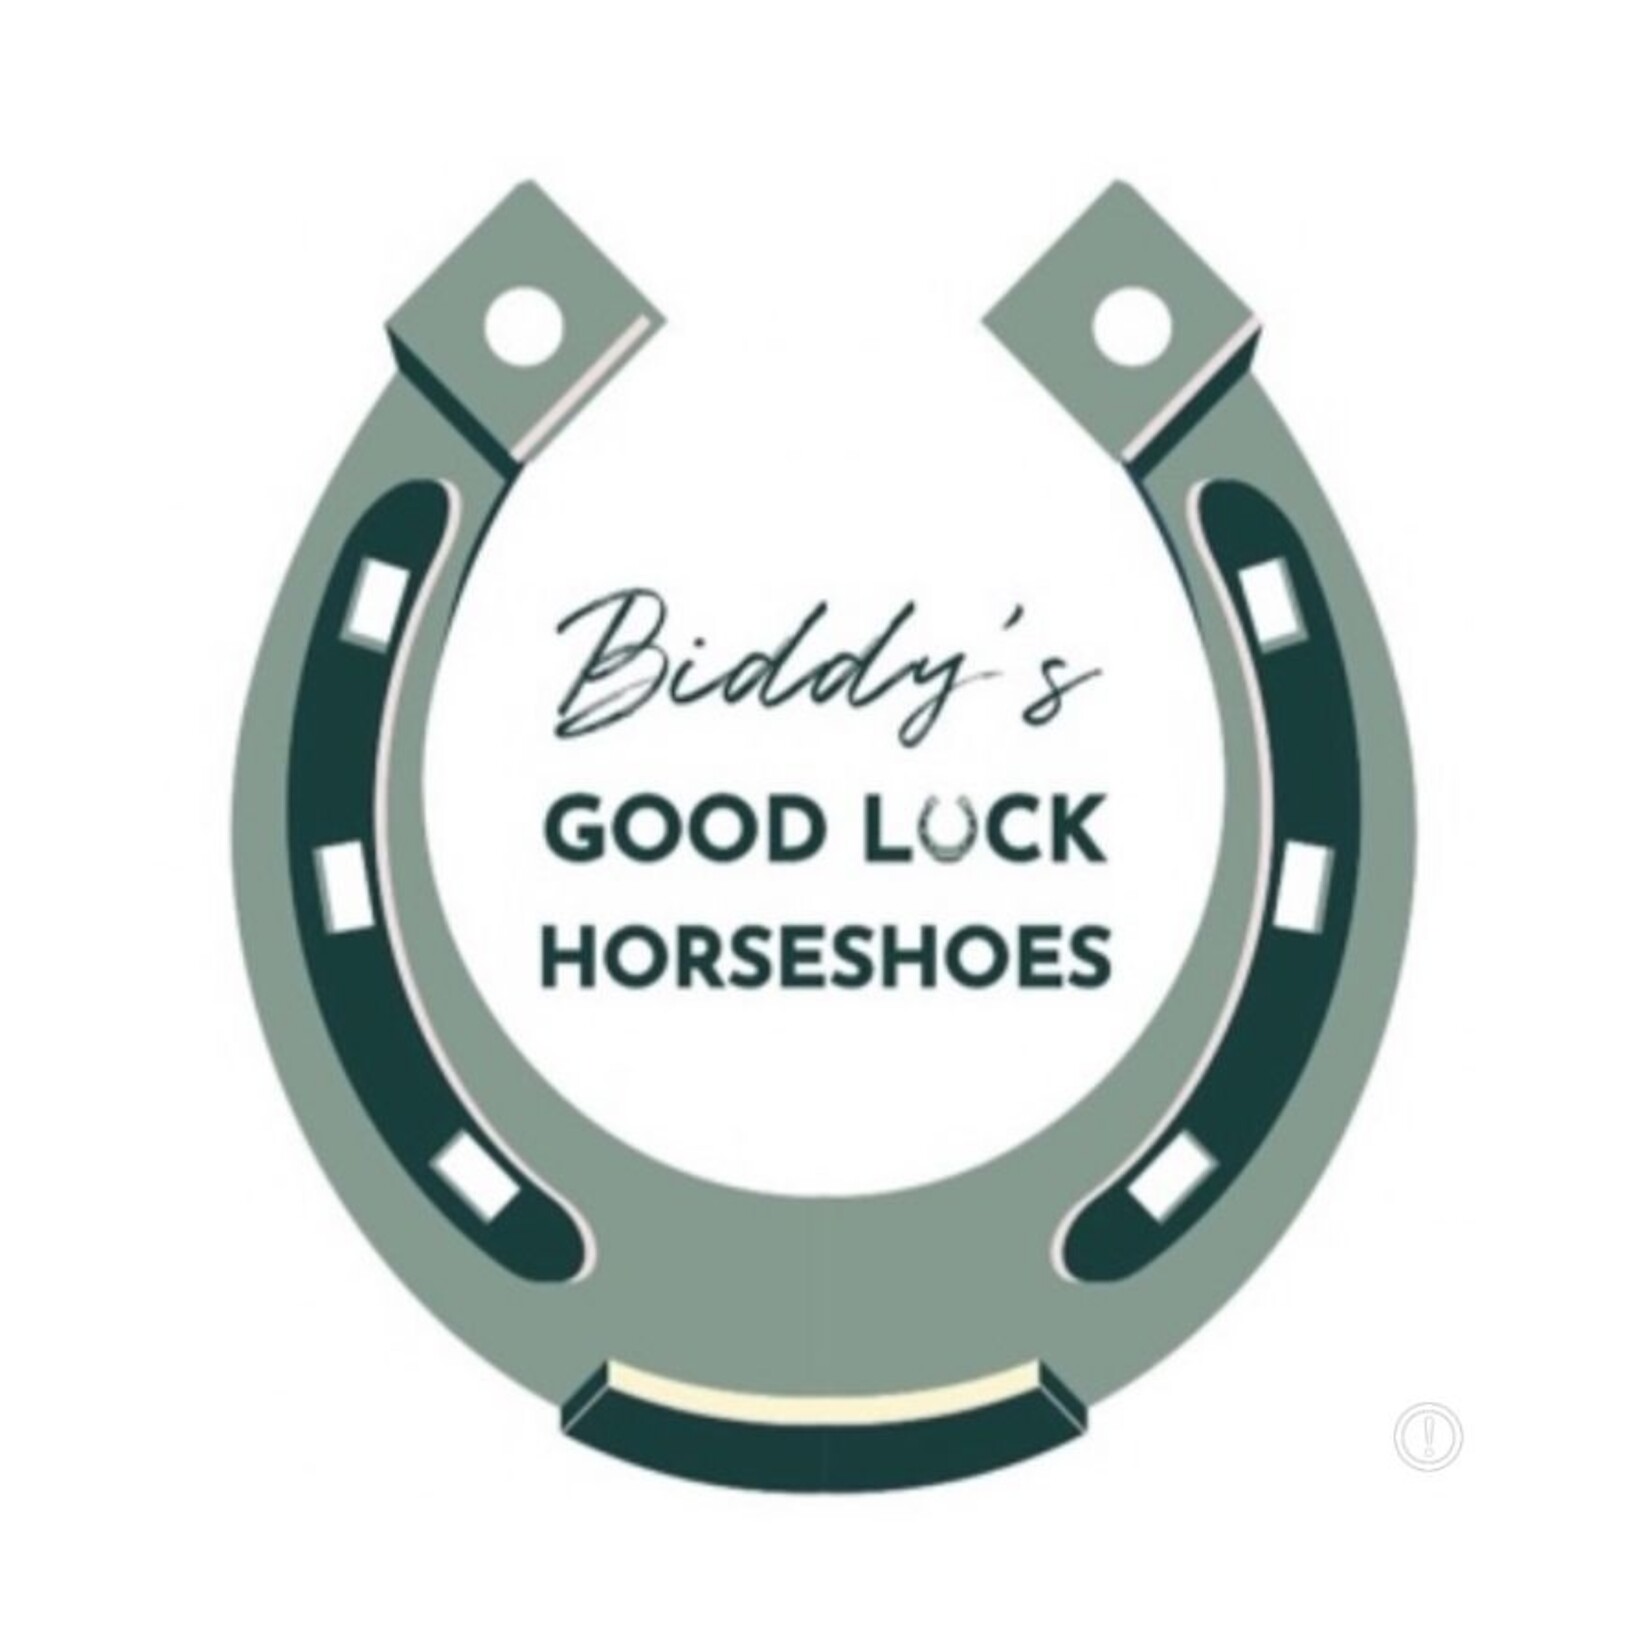 Biddy's Good Luck Horseshoes "Cead Mile Failte" Horseshoe